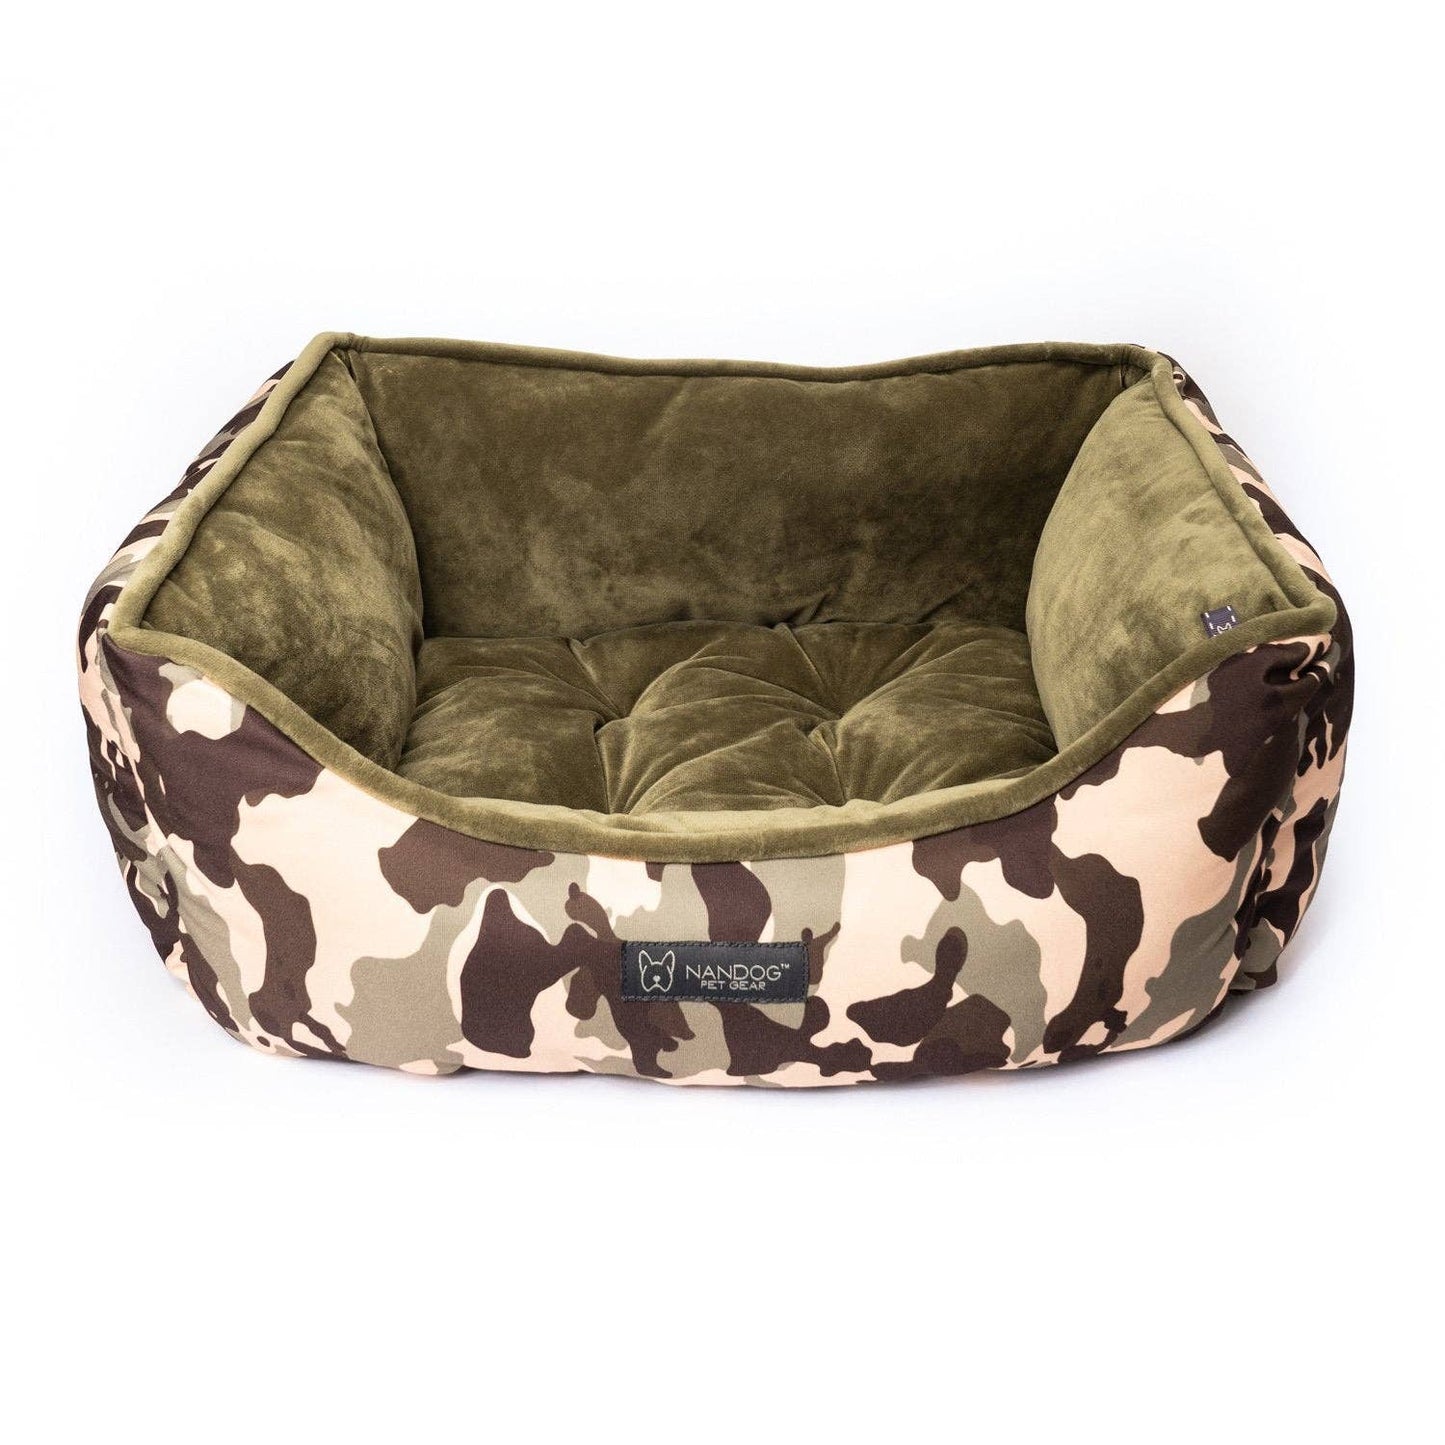 Nandog Pet Gear - REVERSIBLE PET BED CAMOUFLAGE - GREEN  Image